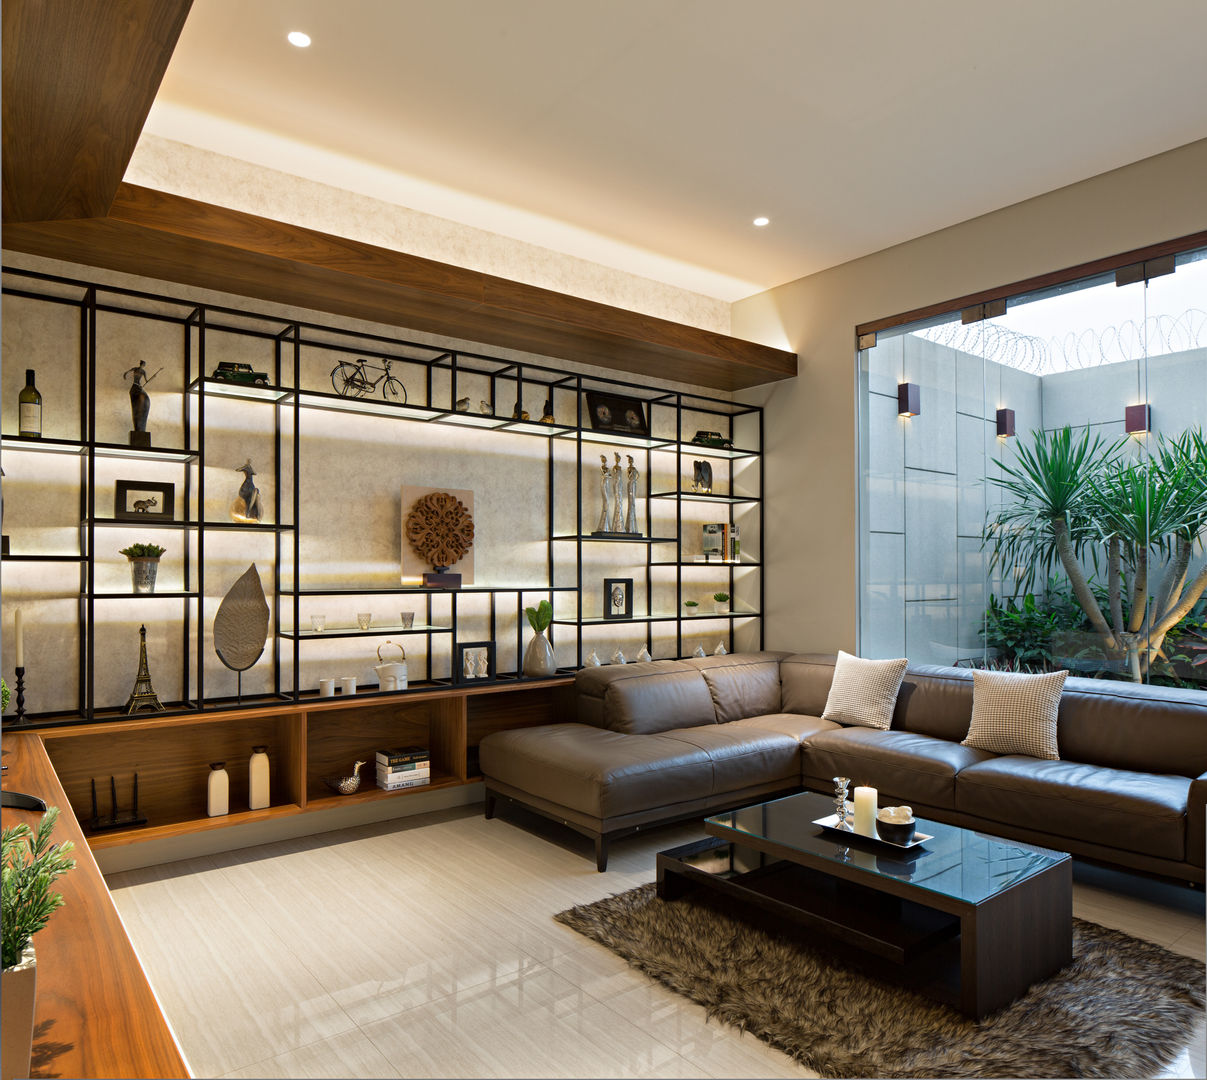 Living Room INERRE Interior Ruang Keluarga Modern Modern,Tropical,Minimalist,Luxurious,Living Room